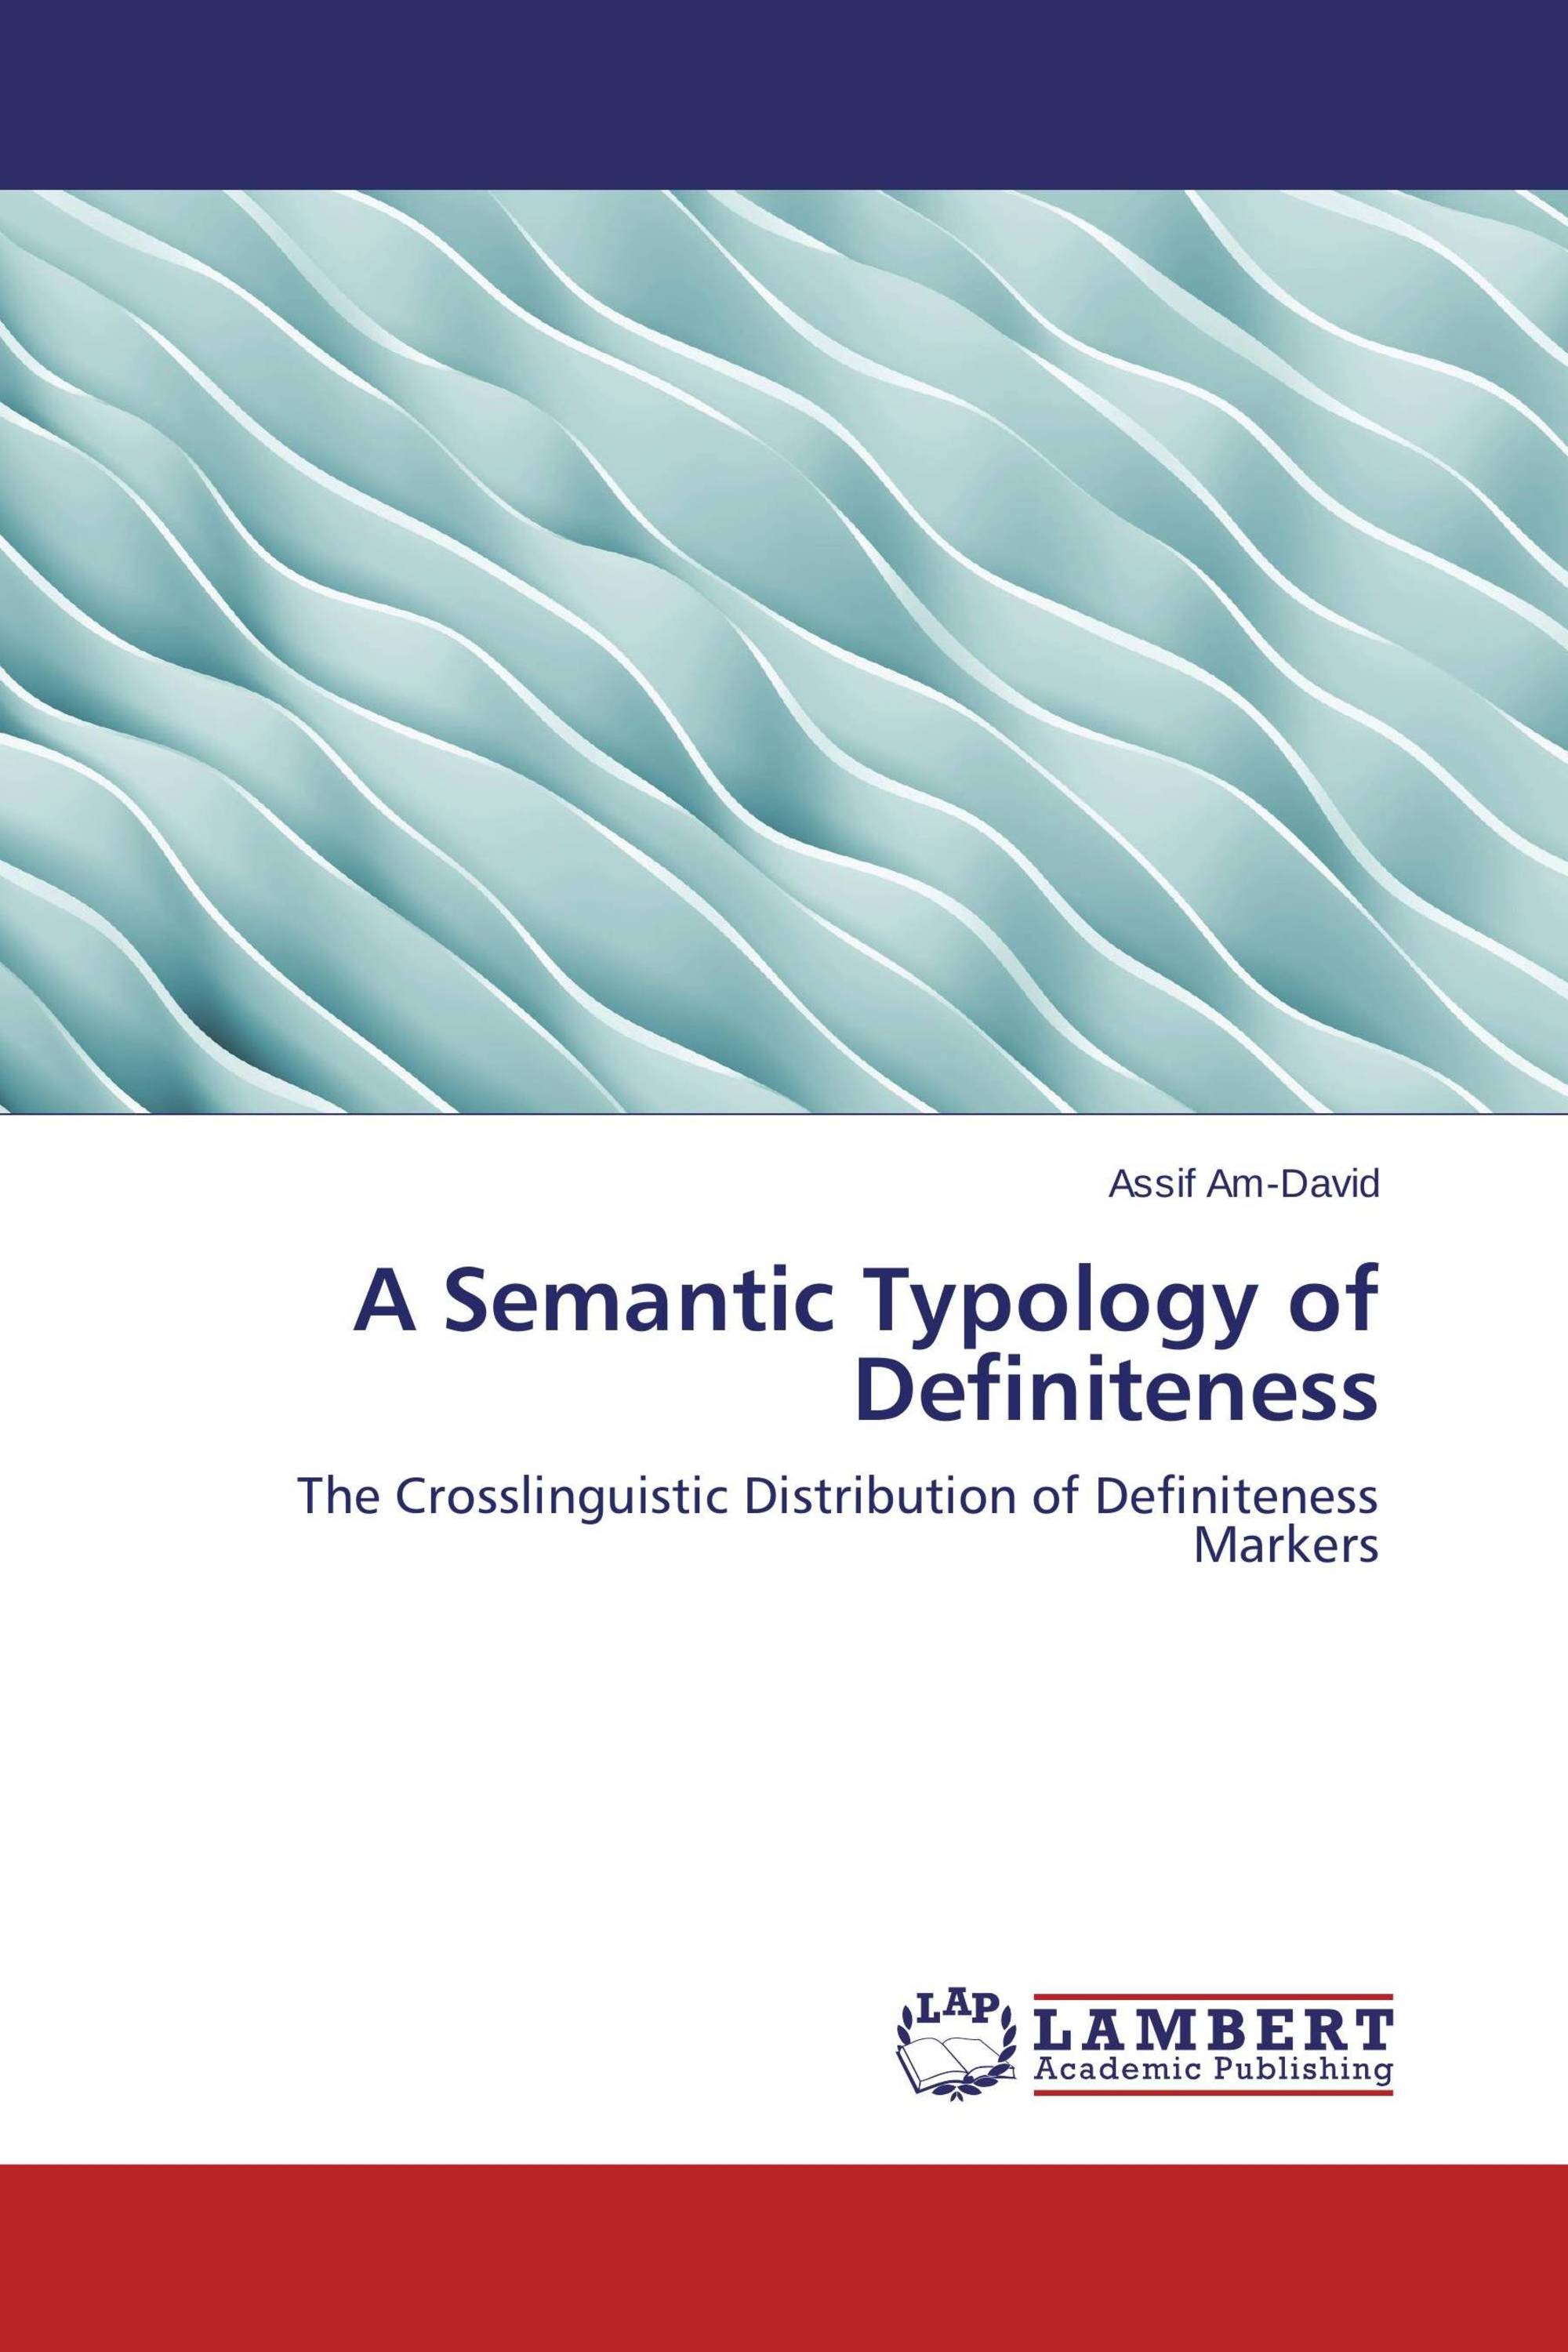 A Semantic Typology of Definiteness